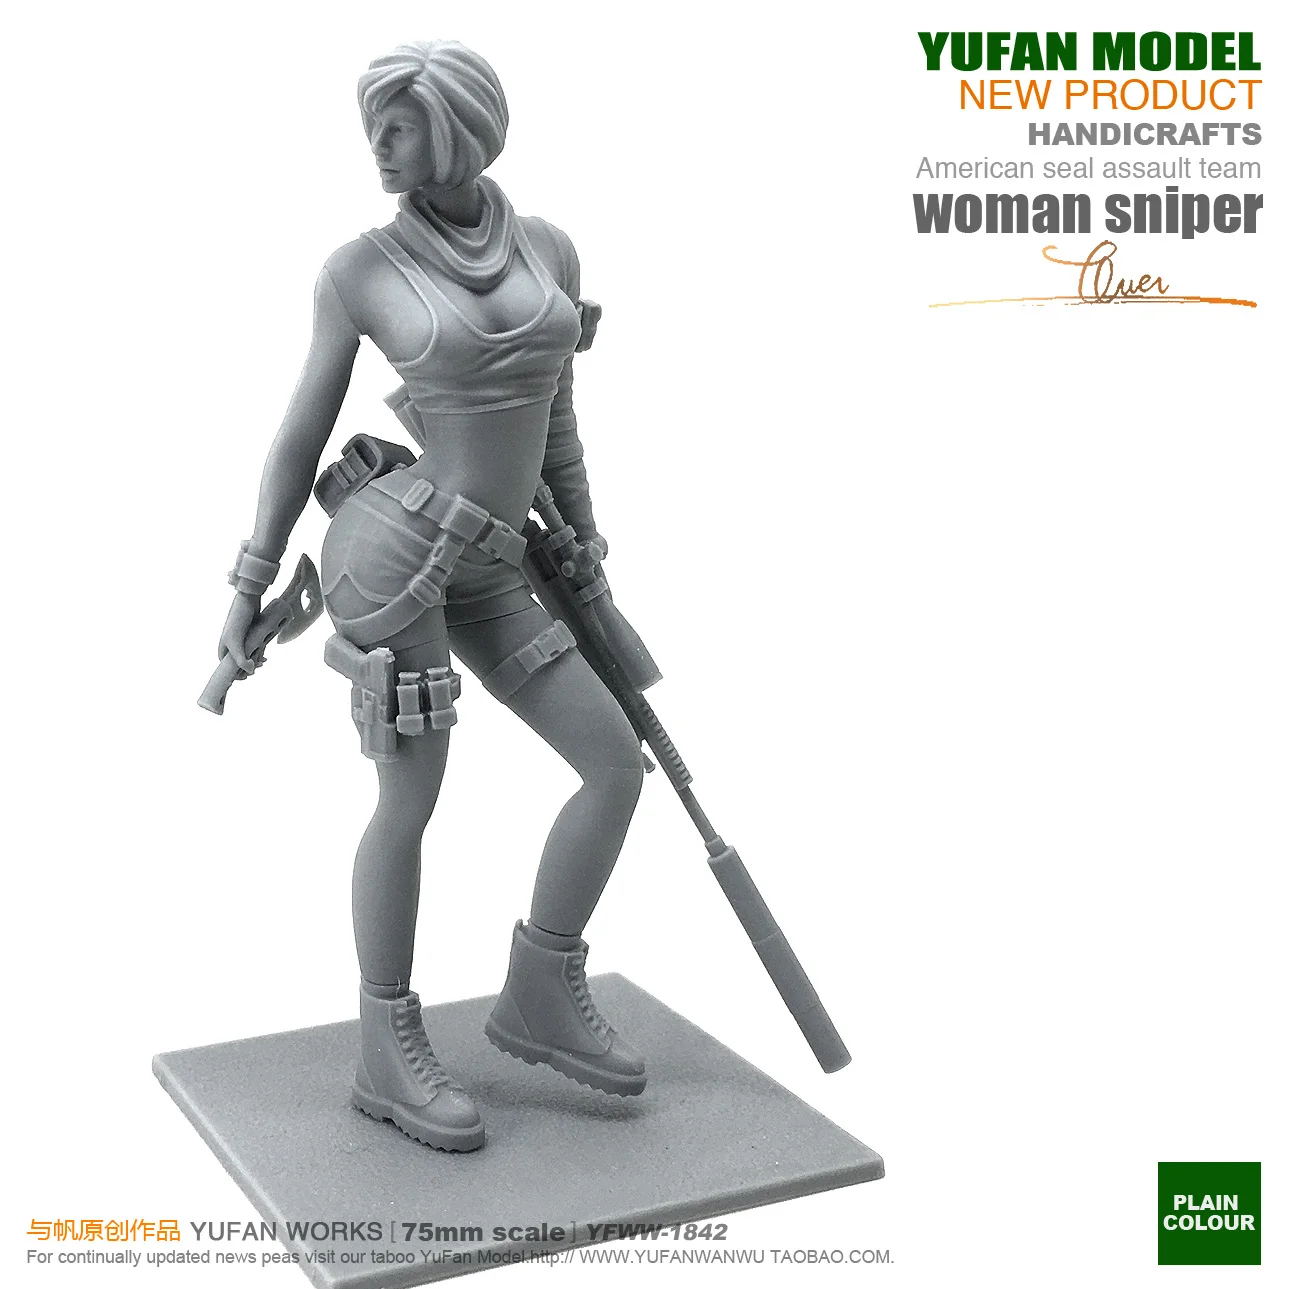 Yufan Modul 1/24 Soldat Model Sexy Femeie Lunetist Rășină Figura Kit 75mm incolor Și Auto-asamblate Yfww-1842